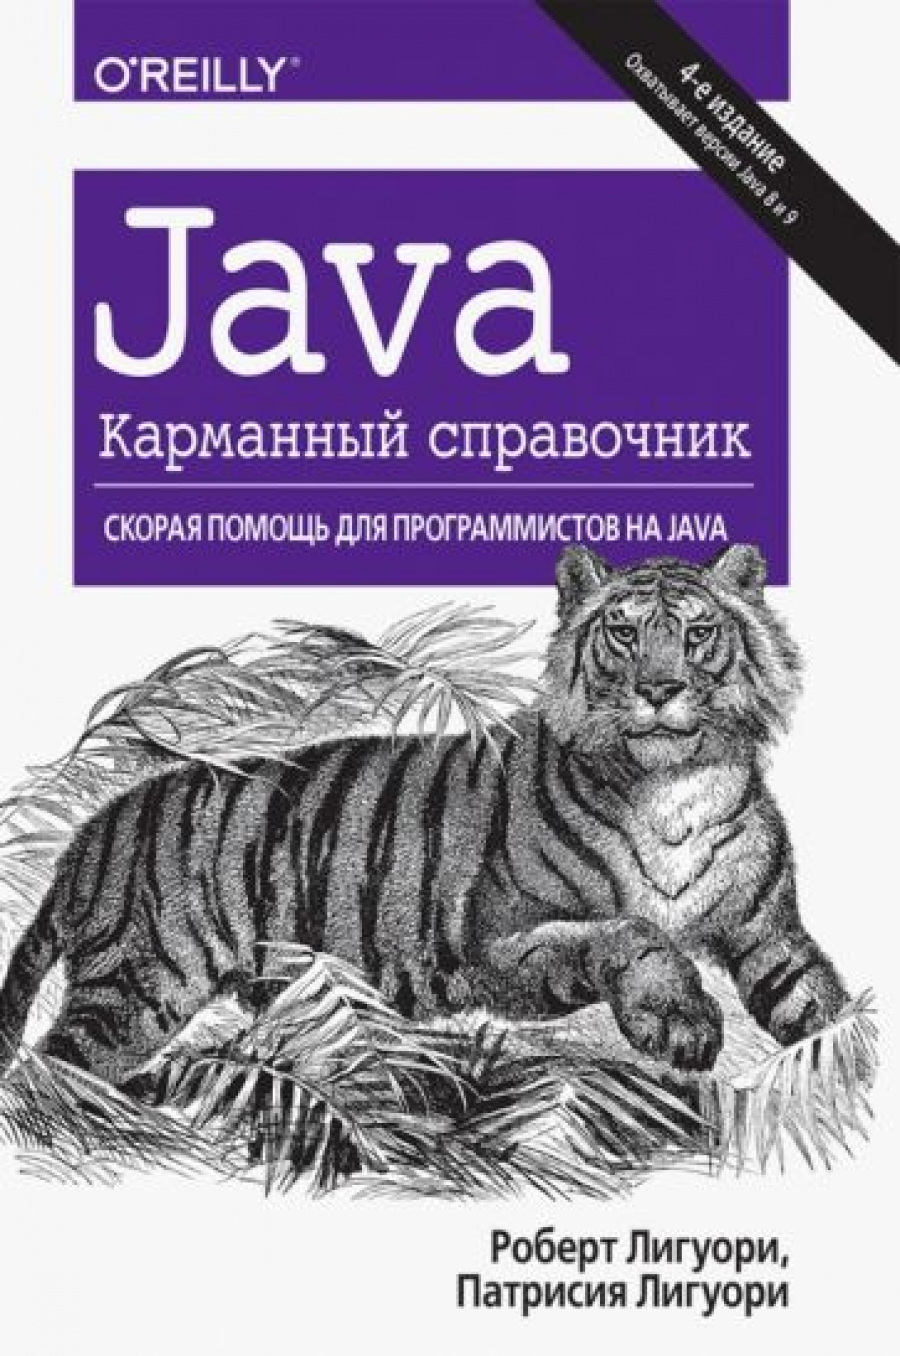 Лигуори Р., Лигуори П. Java. Карманный справочник, 4-е изд. 